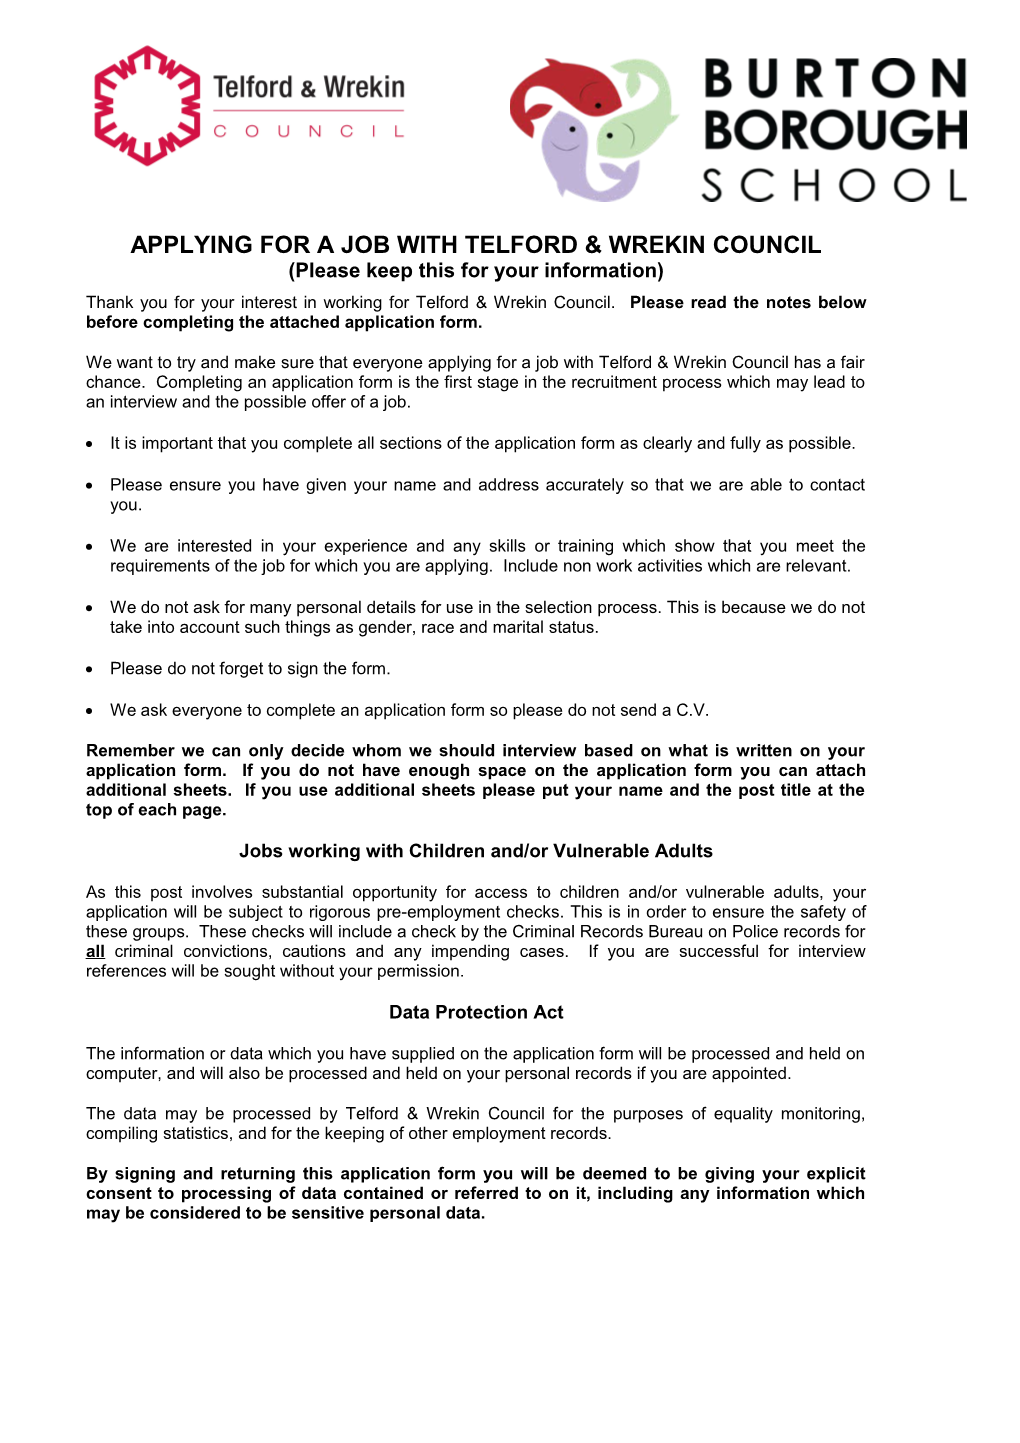 Applying for a Job with Telford & Wrekin Council